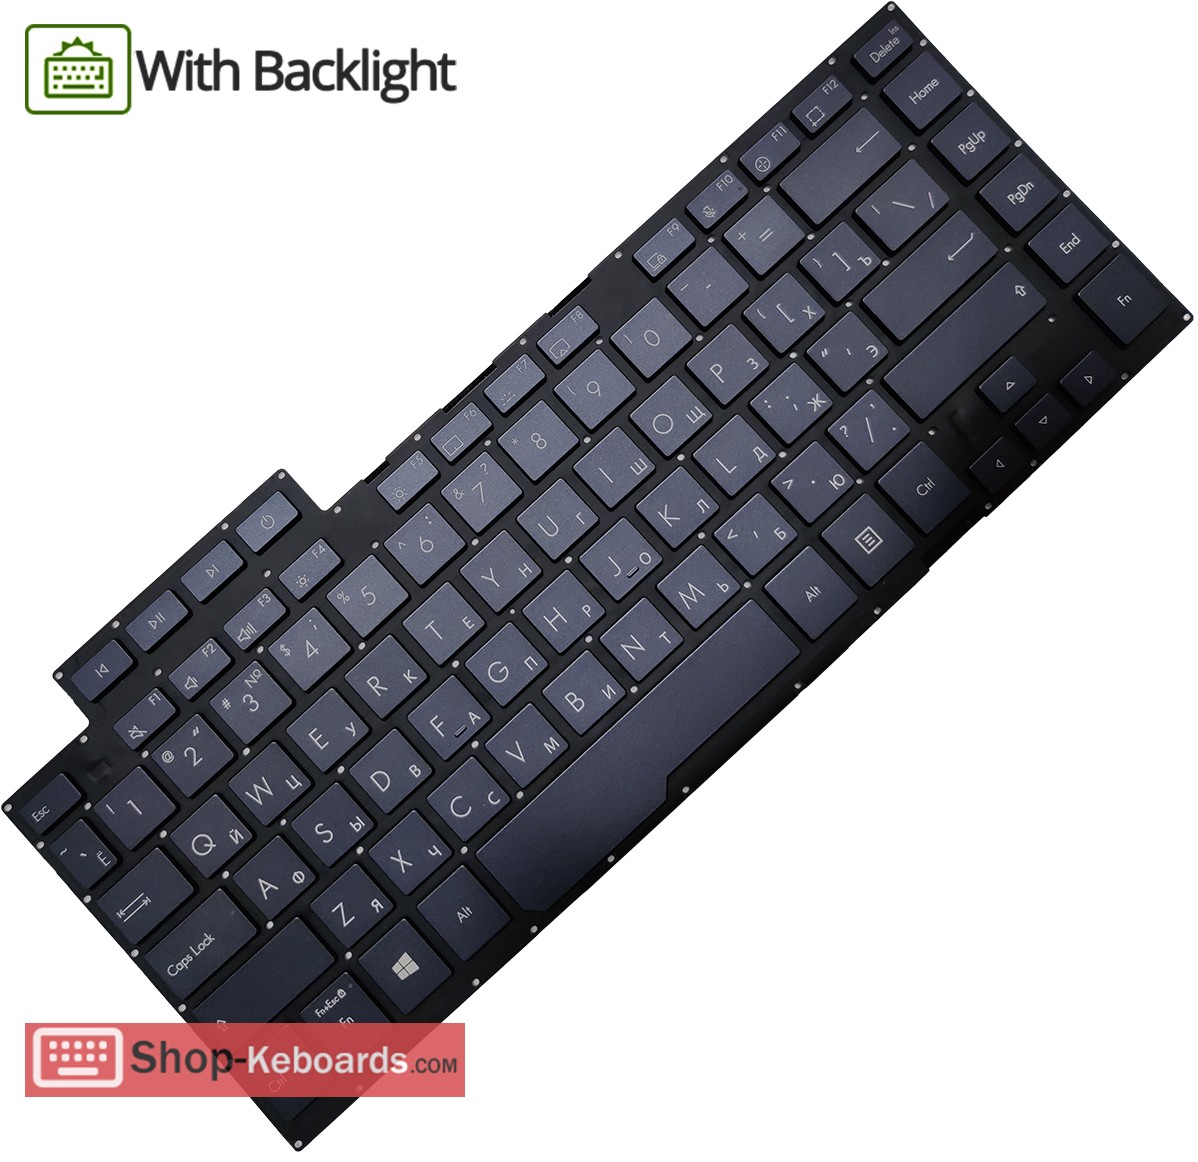 Asus 0KNB0-4611LA00  Keyboard replacement